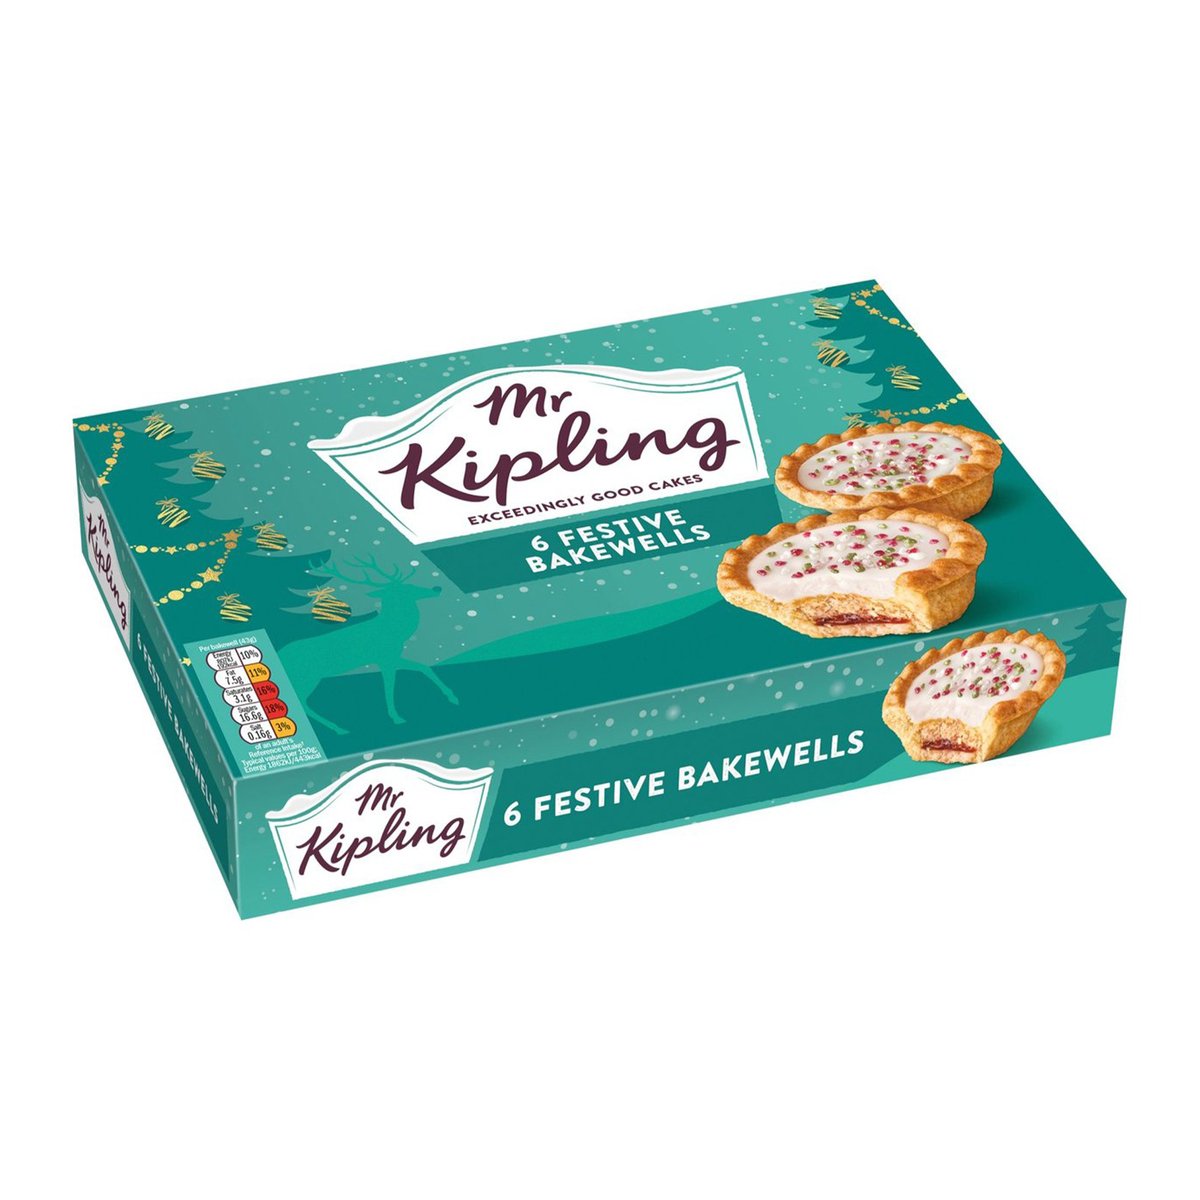 Mr Kipling Festive Bakewells 6 pcs